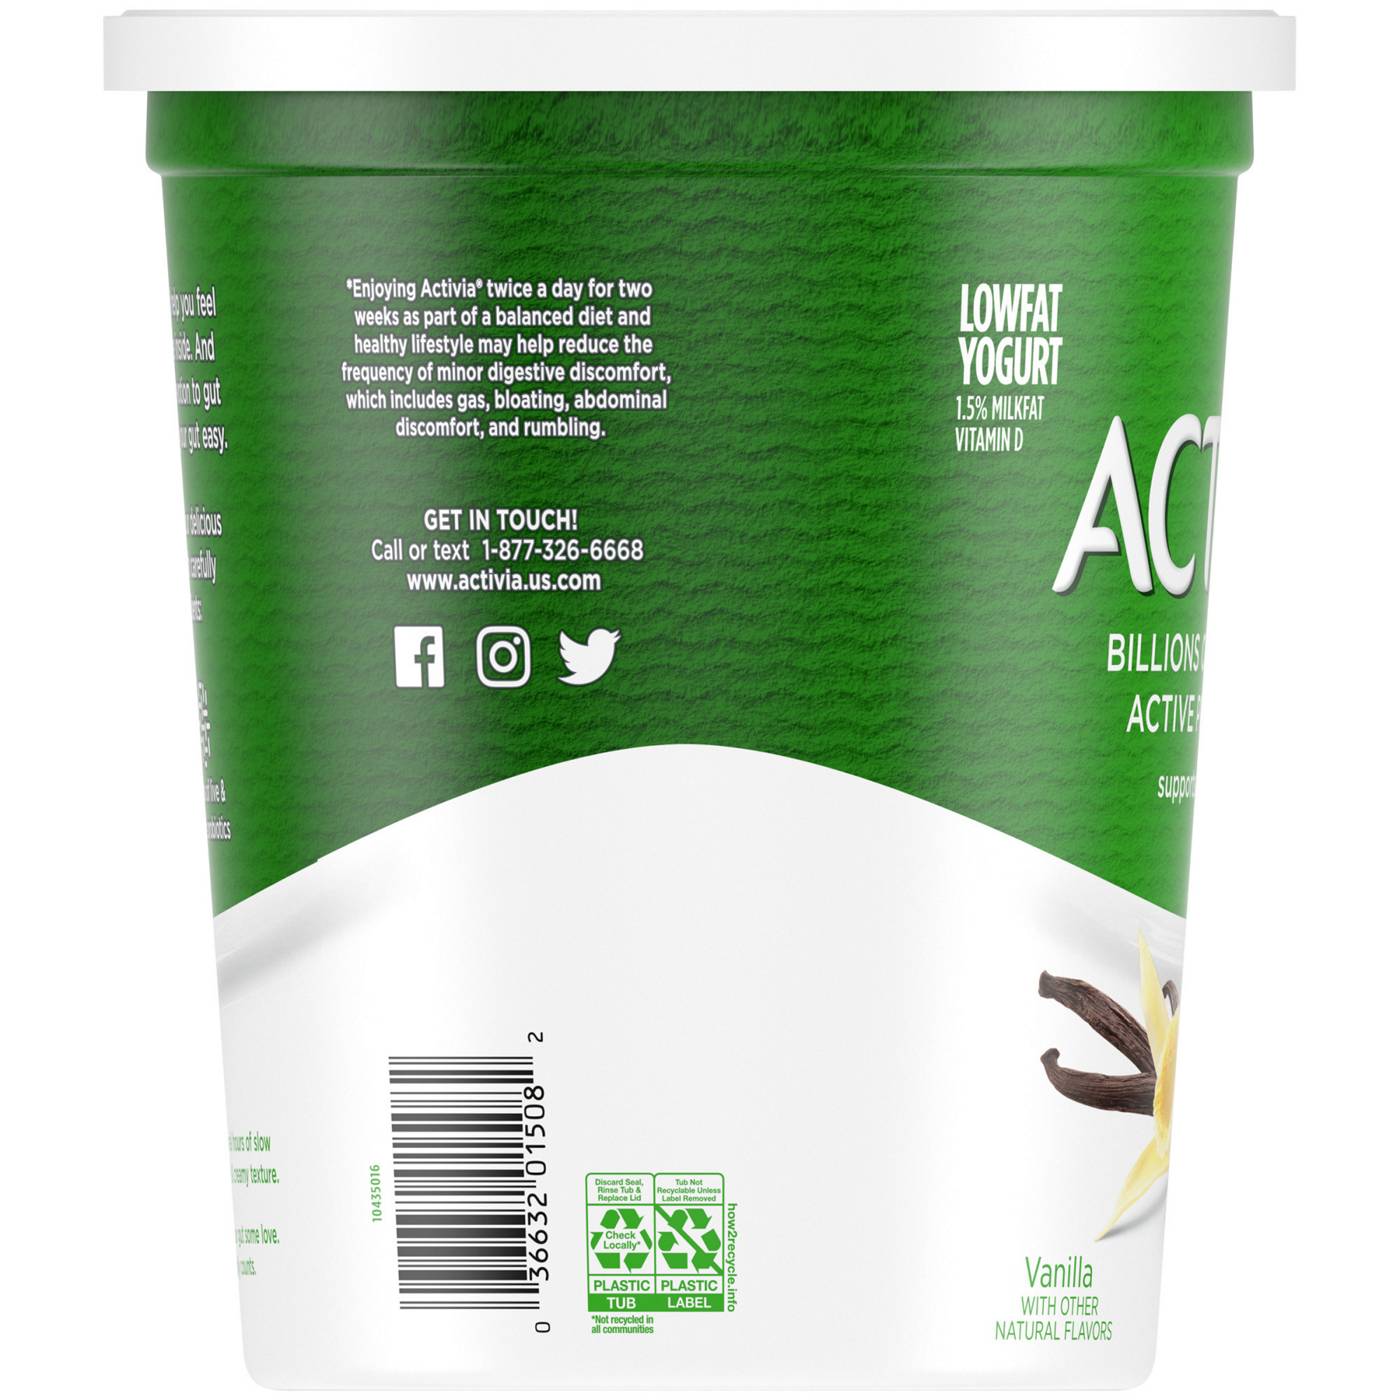 Activia Lowfat Probiotic Black Cherry Yogurt - Shop Yogurt at H-E-B